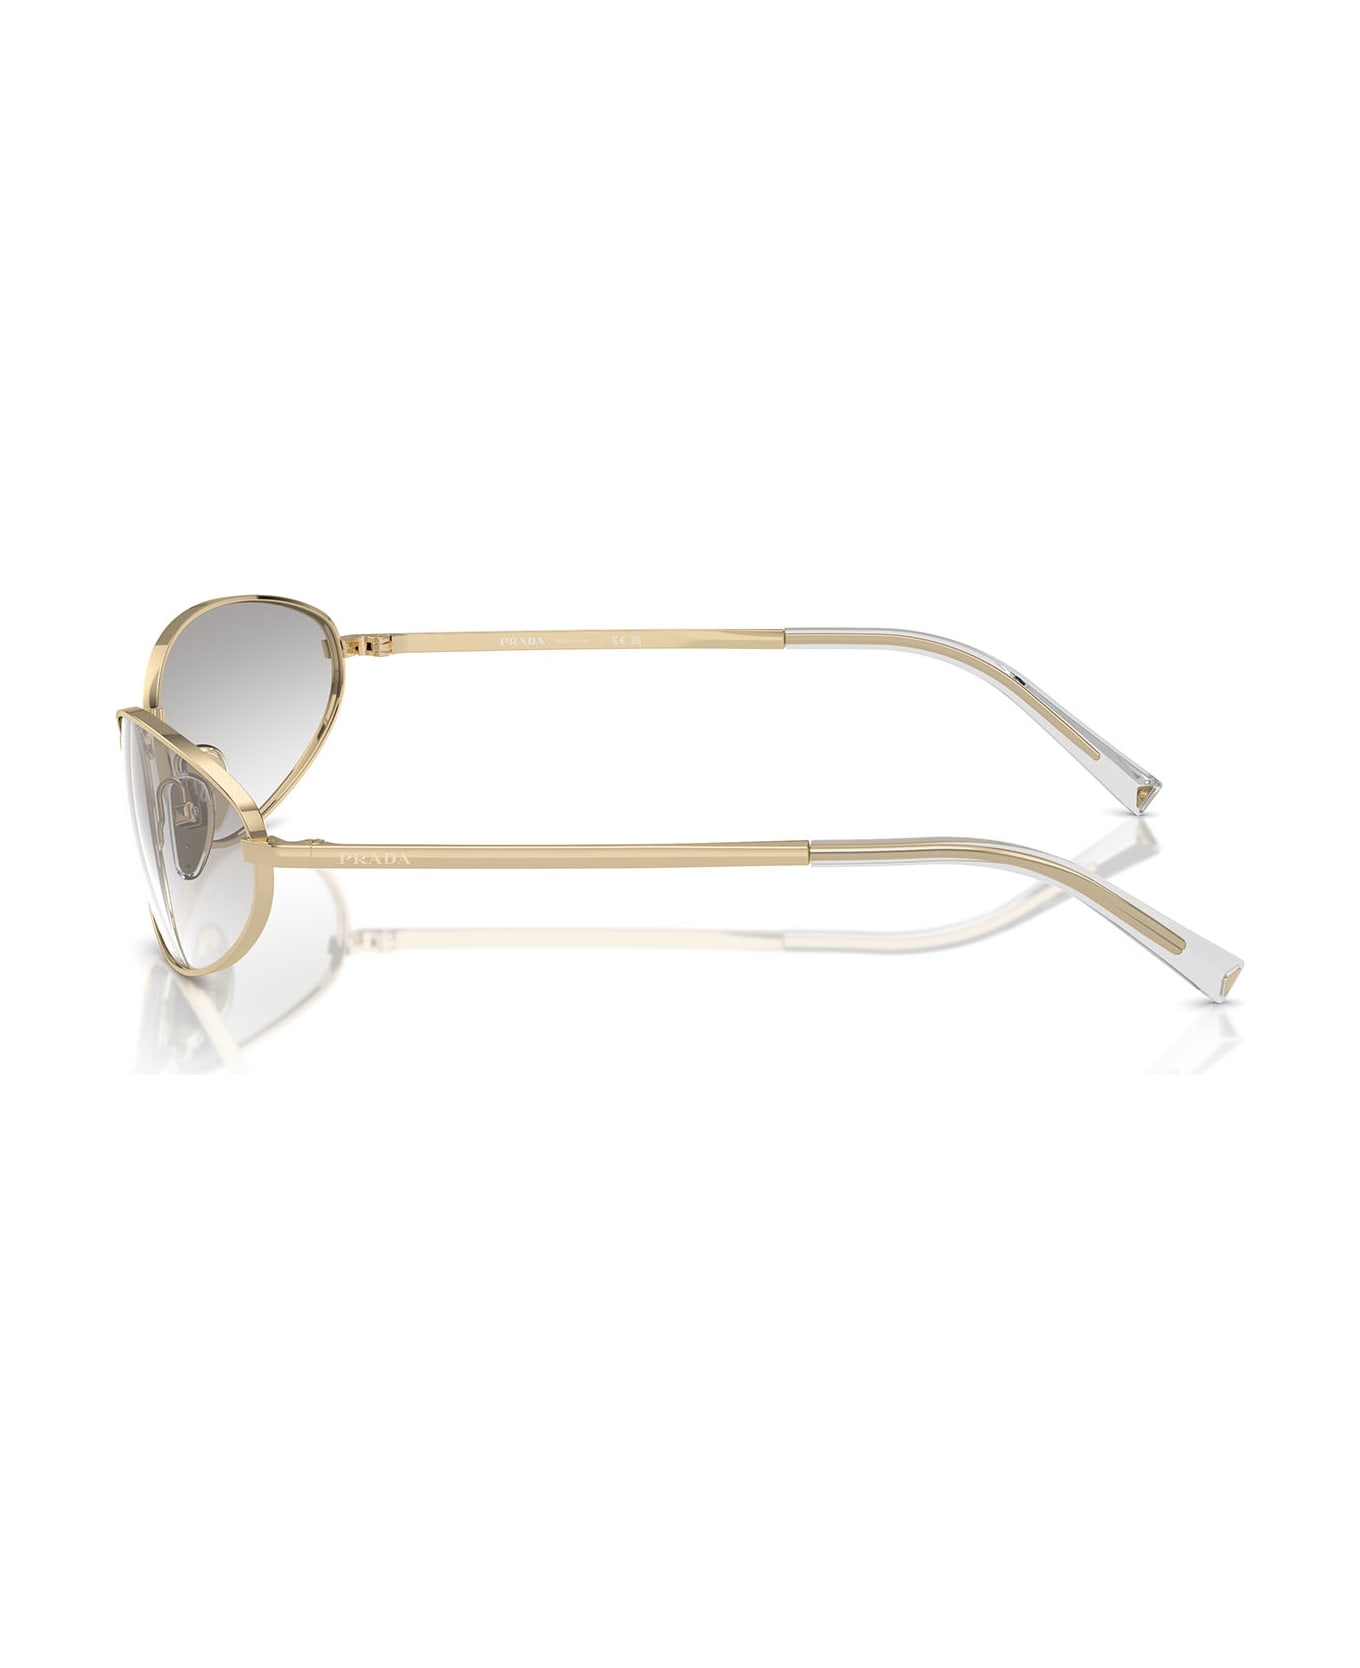 Prada Eyewear Pr A59s Pale Gold Sunglasses - Pale Gold